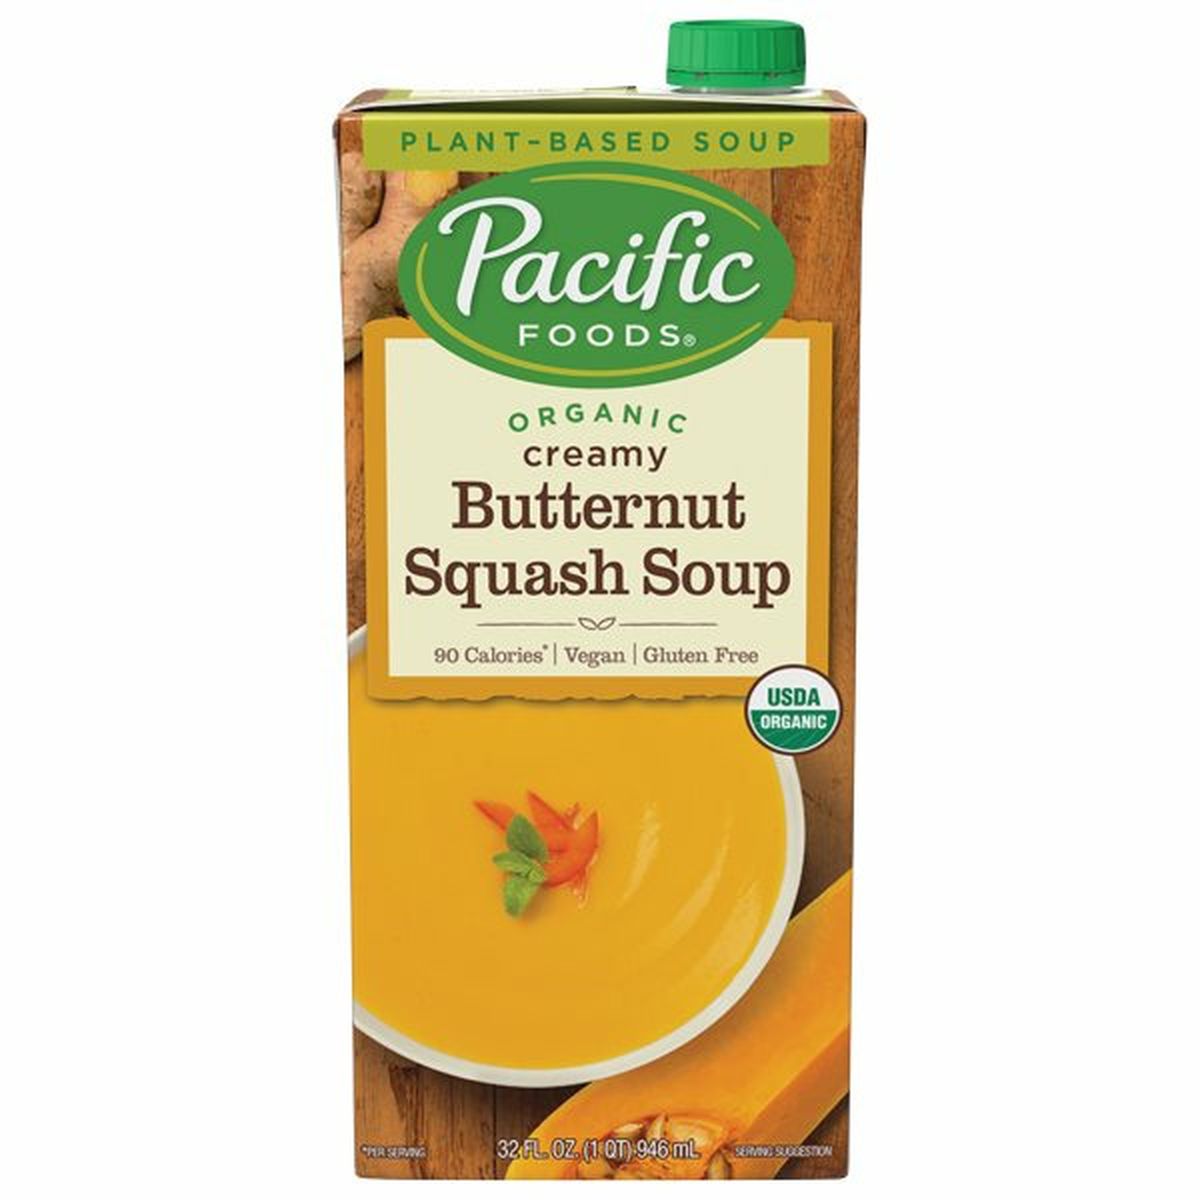 Calories in Pacific Soup, Organic, Butternut Squash, Creamy